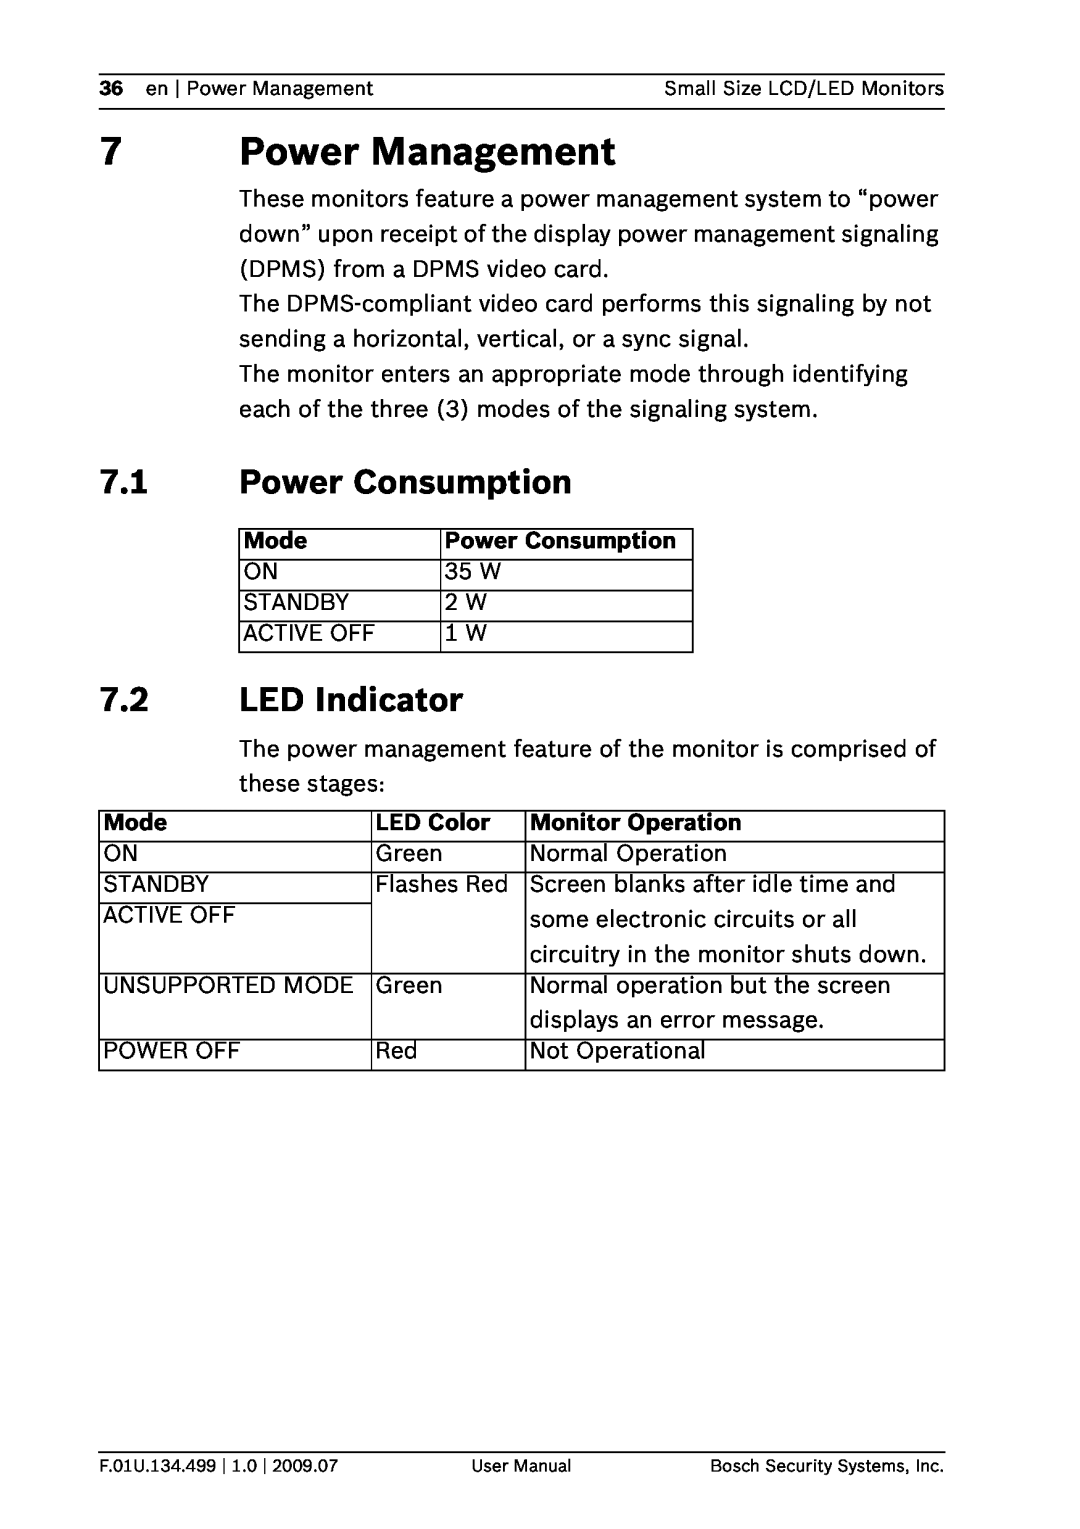 Bosch Appliances UML-102-90 Power Management, Power Consumption, LED Indicator, Mode, LED Color, Monitor Operation 